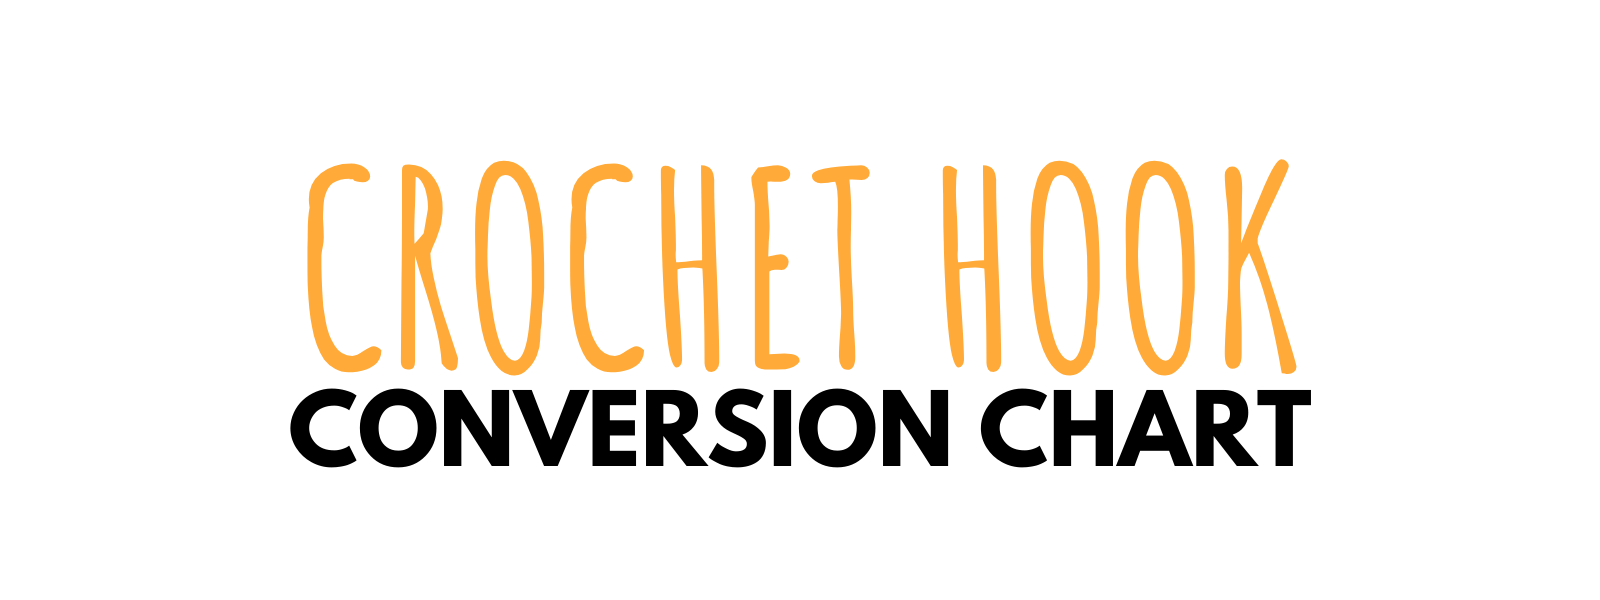 Crochet Hook Conversion Chart. FREE CHART 6/14.  Crochet hook conversion  chart, Crochet hooks, Crochet hook conversion